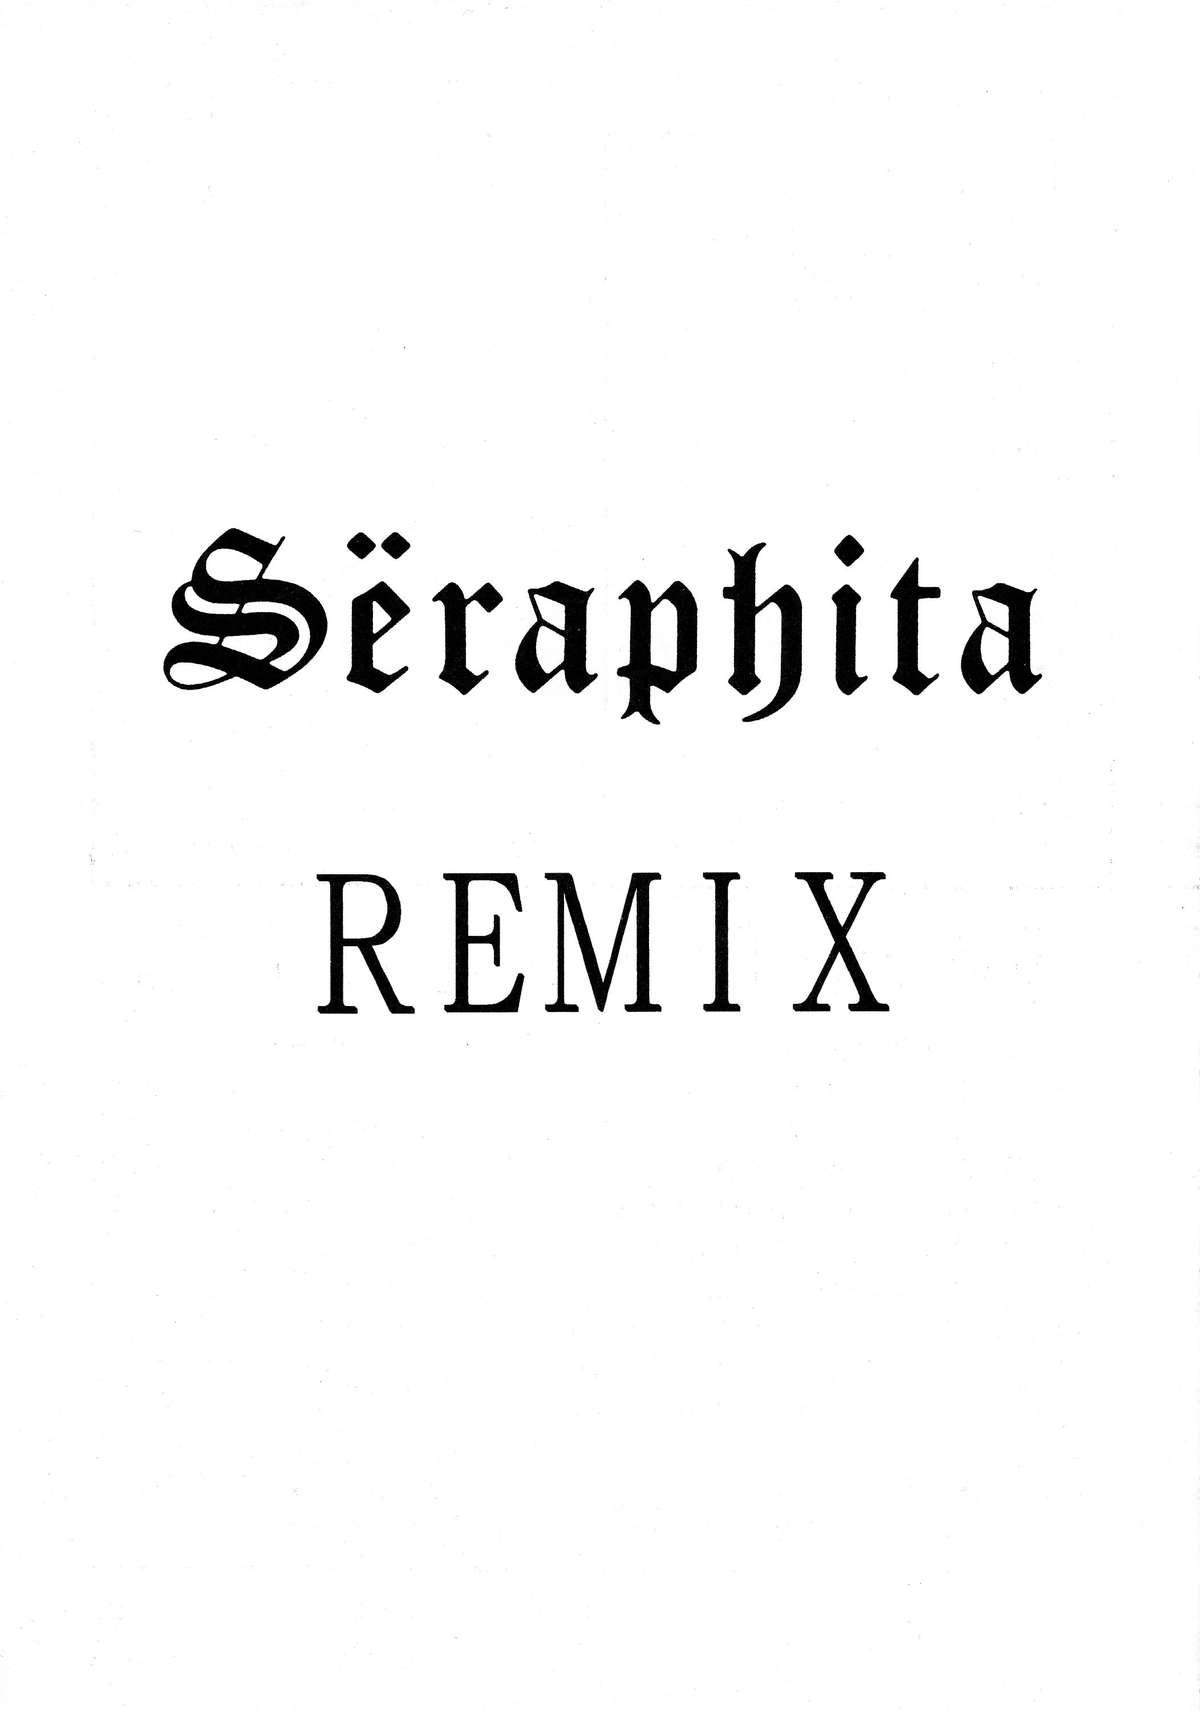 Seraphita REMIX 2